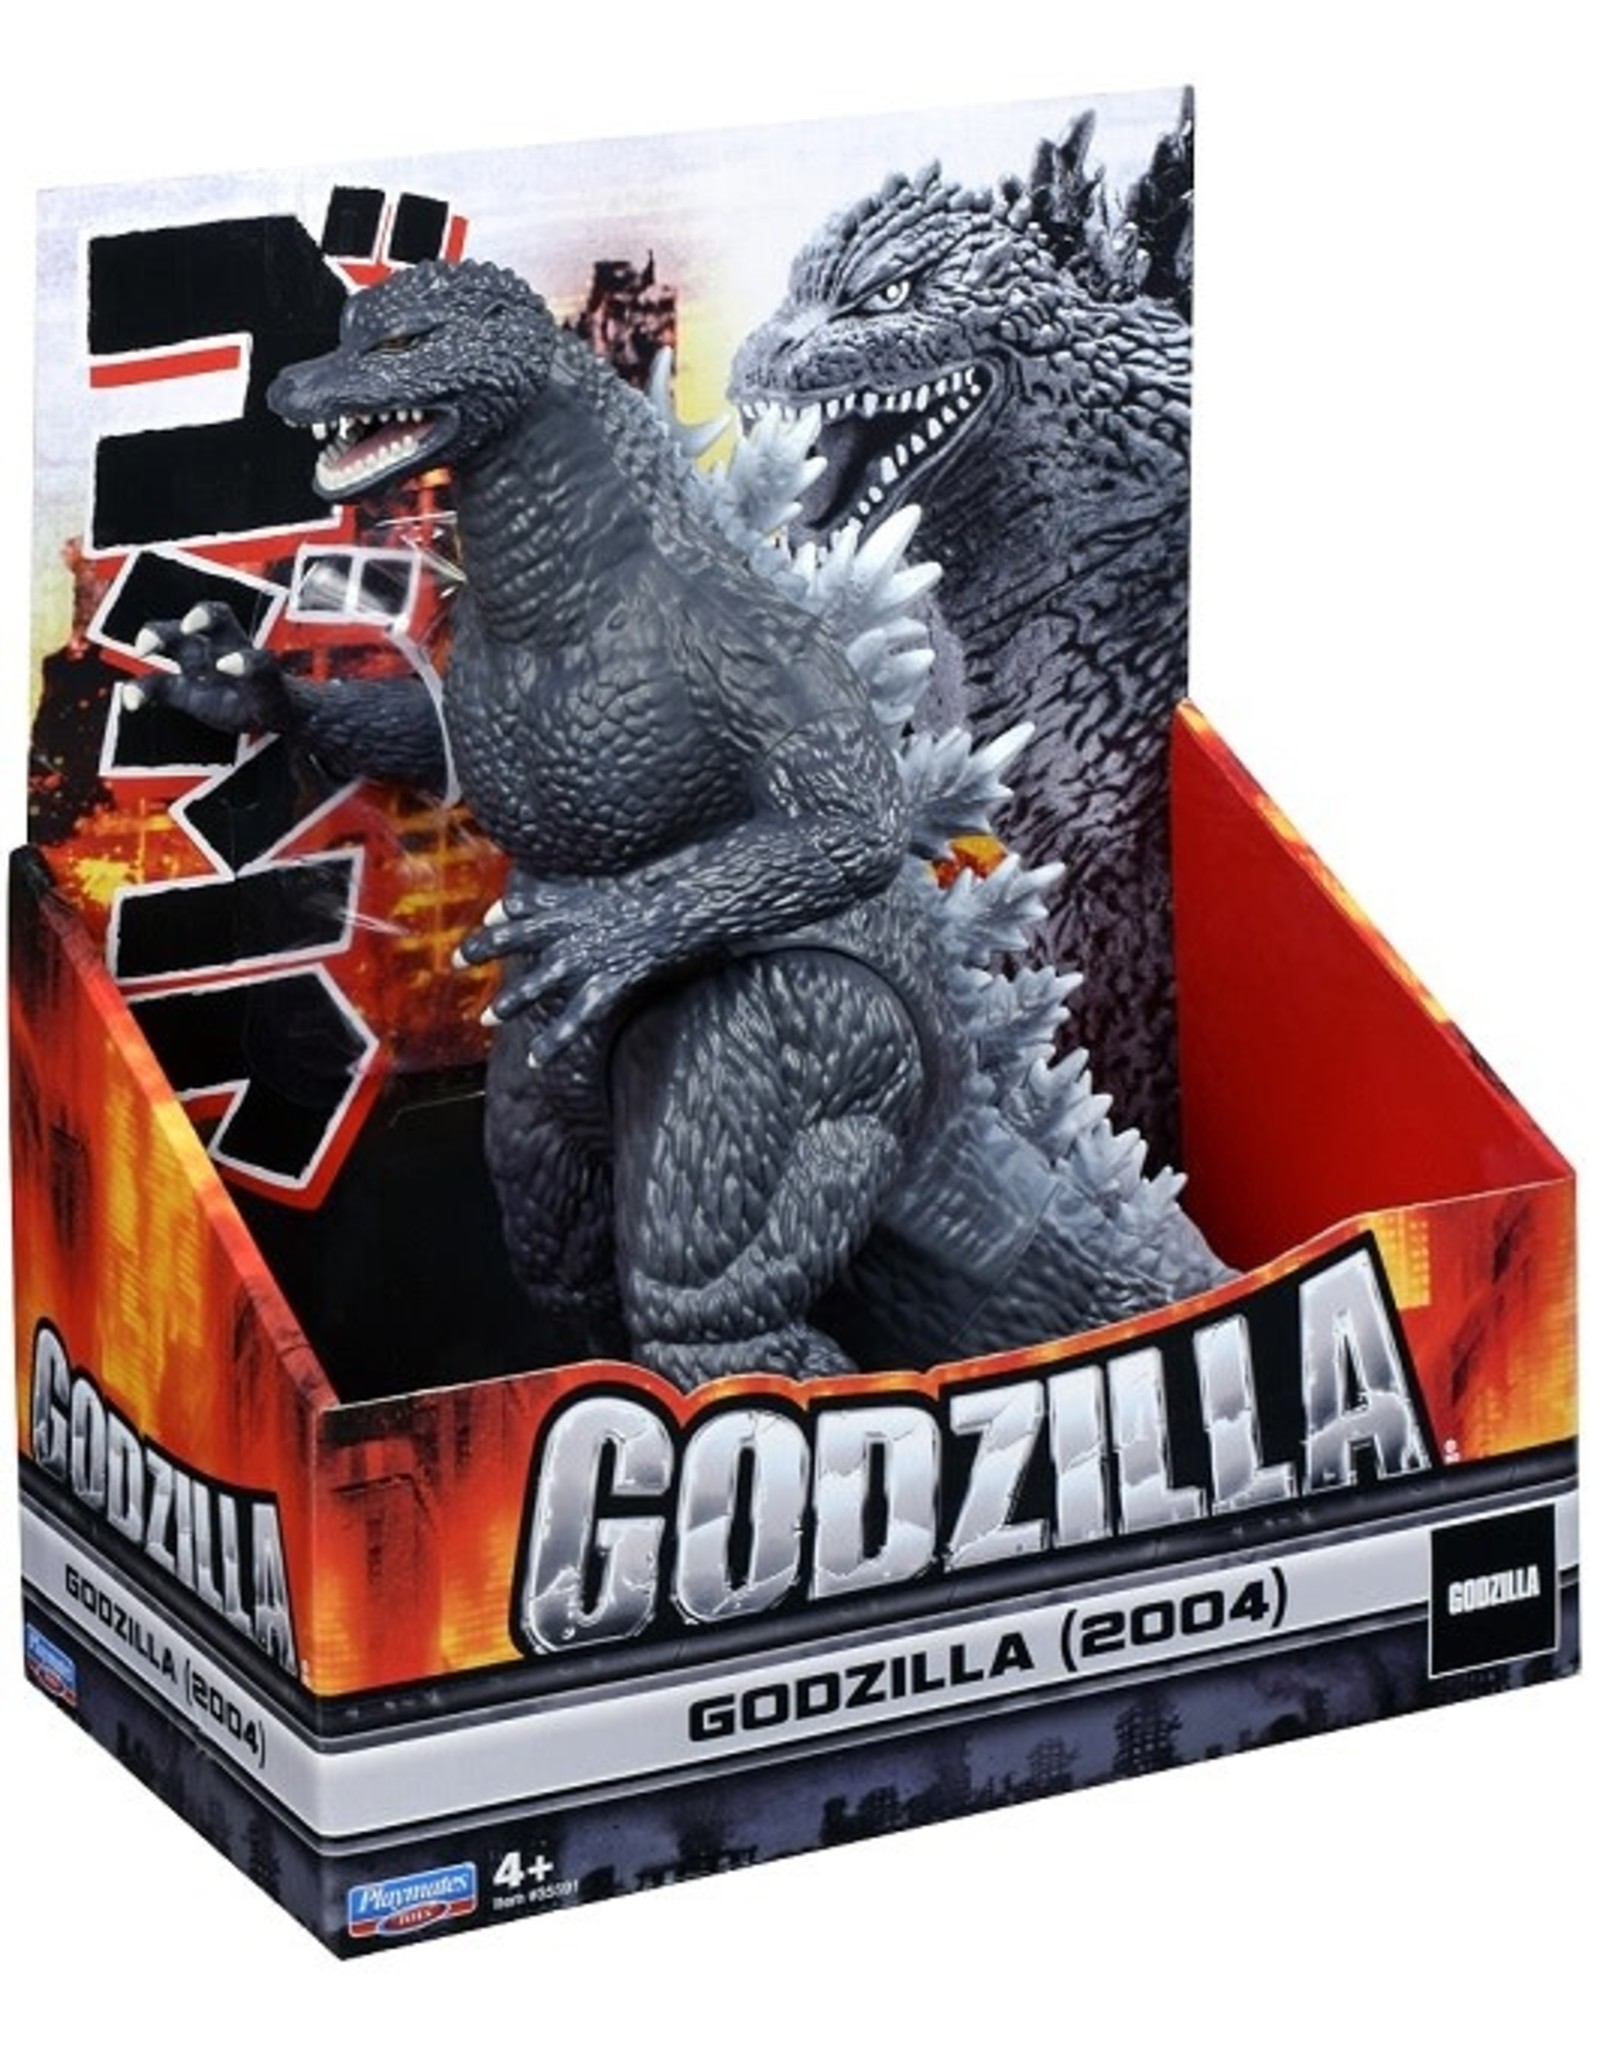 playmates toys Giant Godzilla (2004)